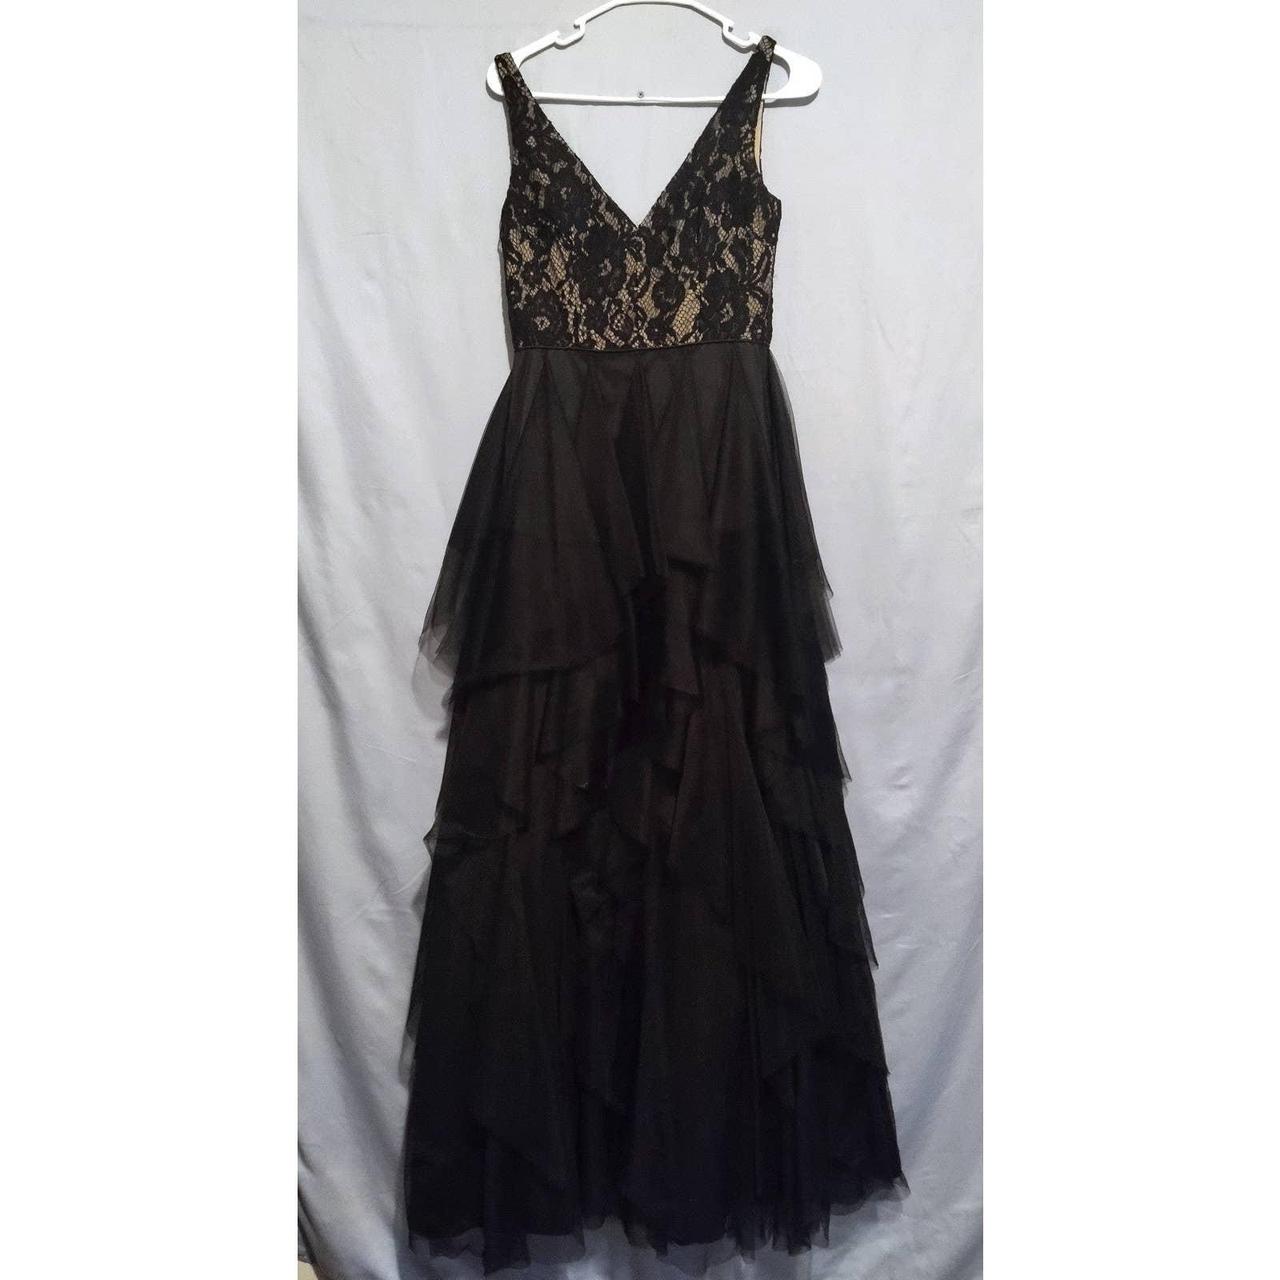 Product Image 1 - Aidan Mattox Black Maxi Dress.